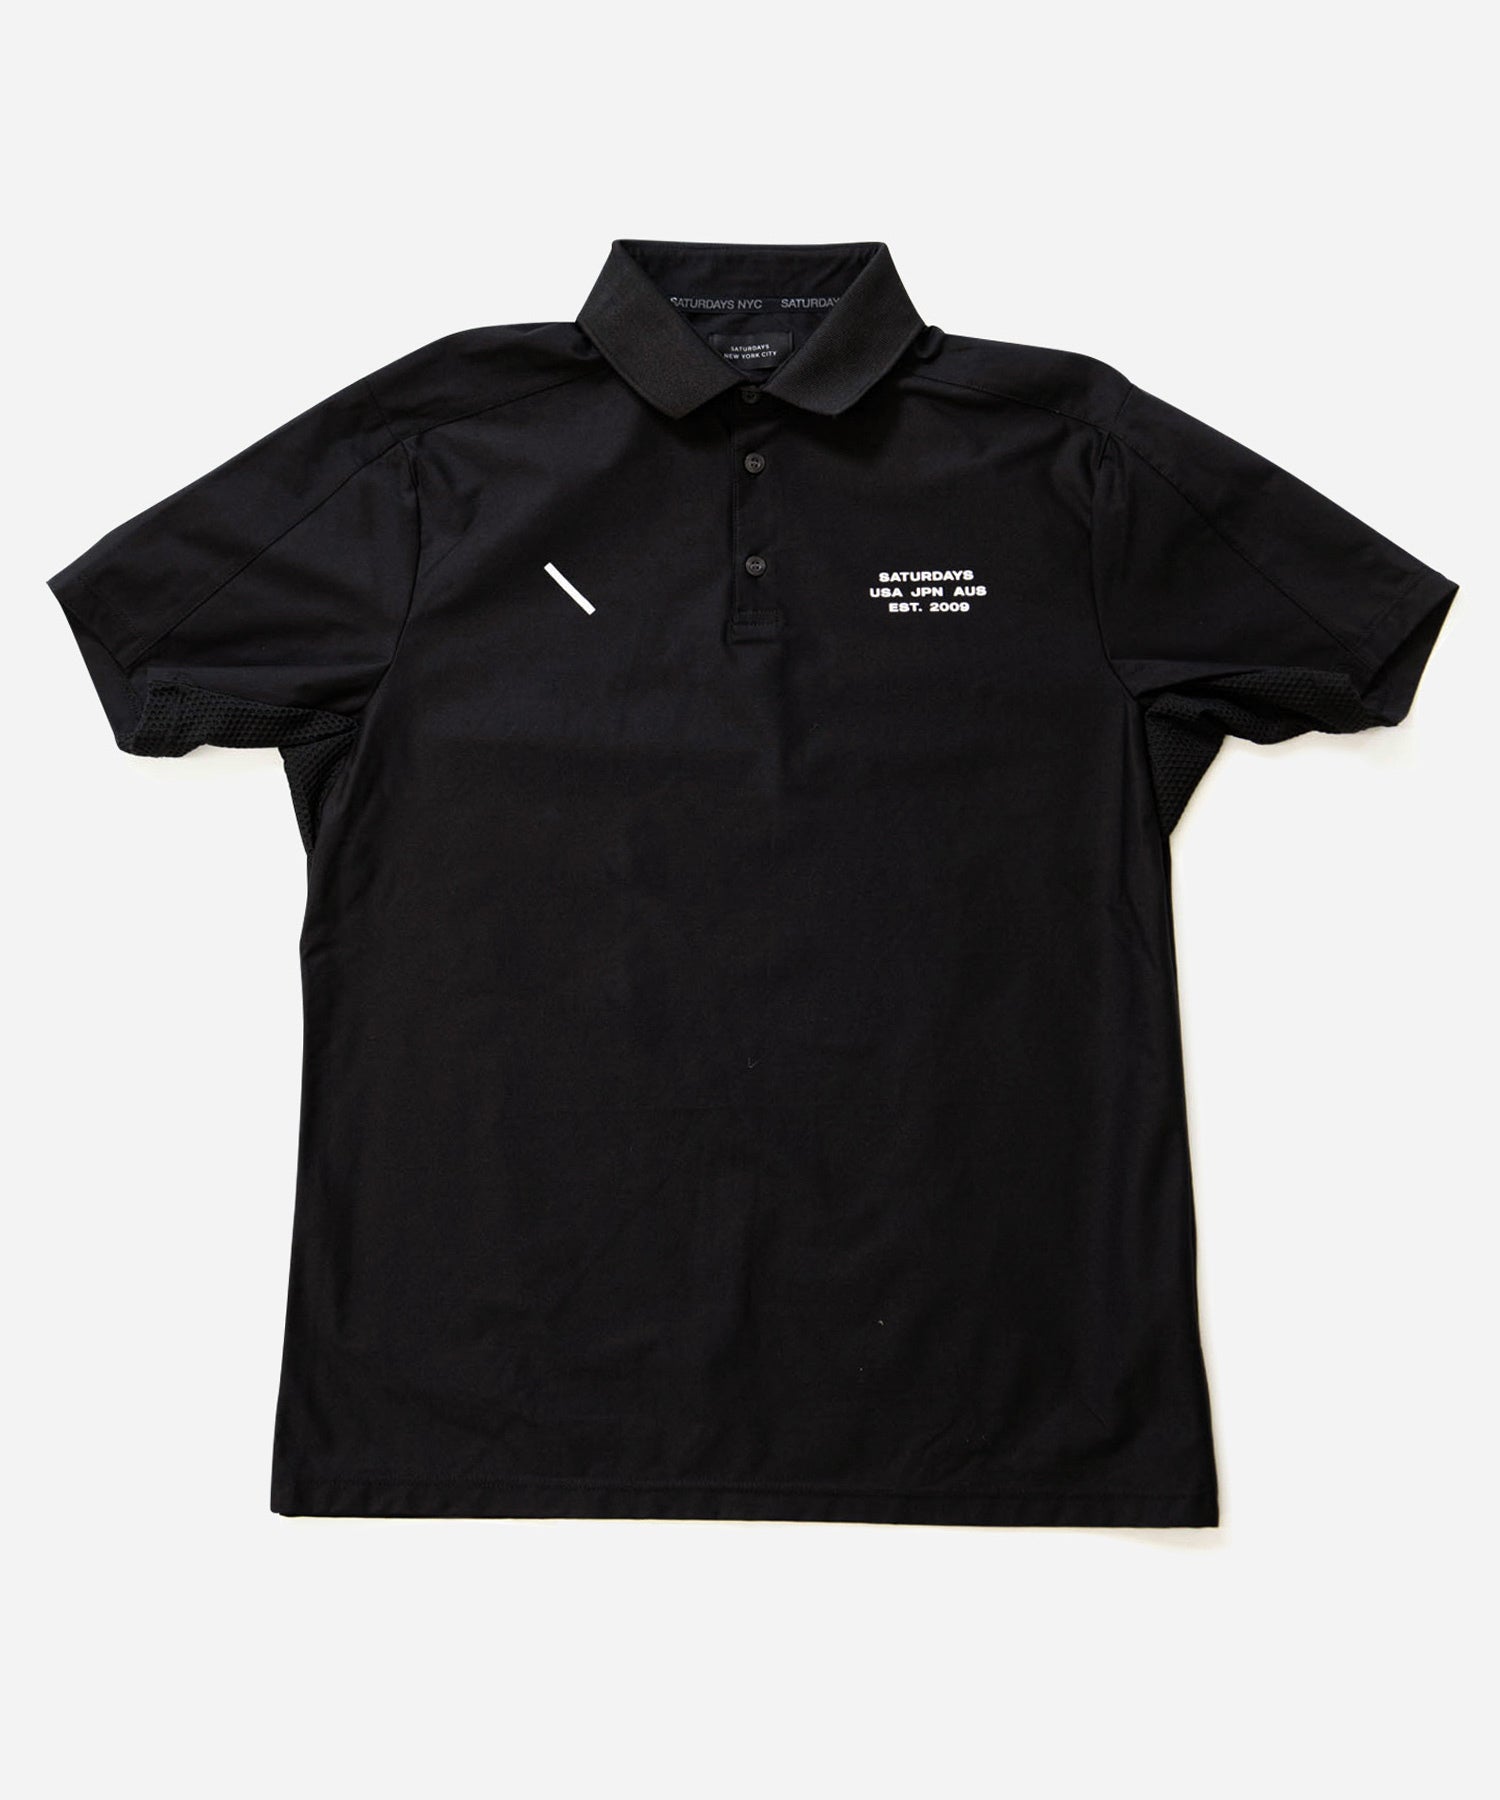 Saturdays NYC(サタデーズ ニューヨークシティ) / Basic Polo Shirt 